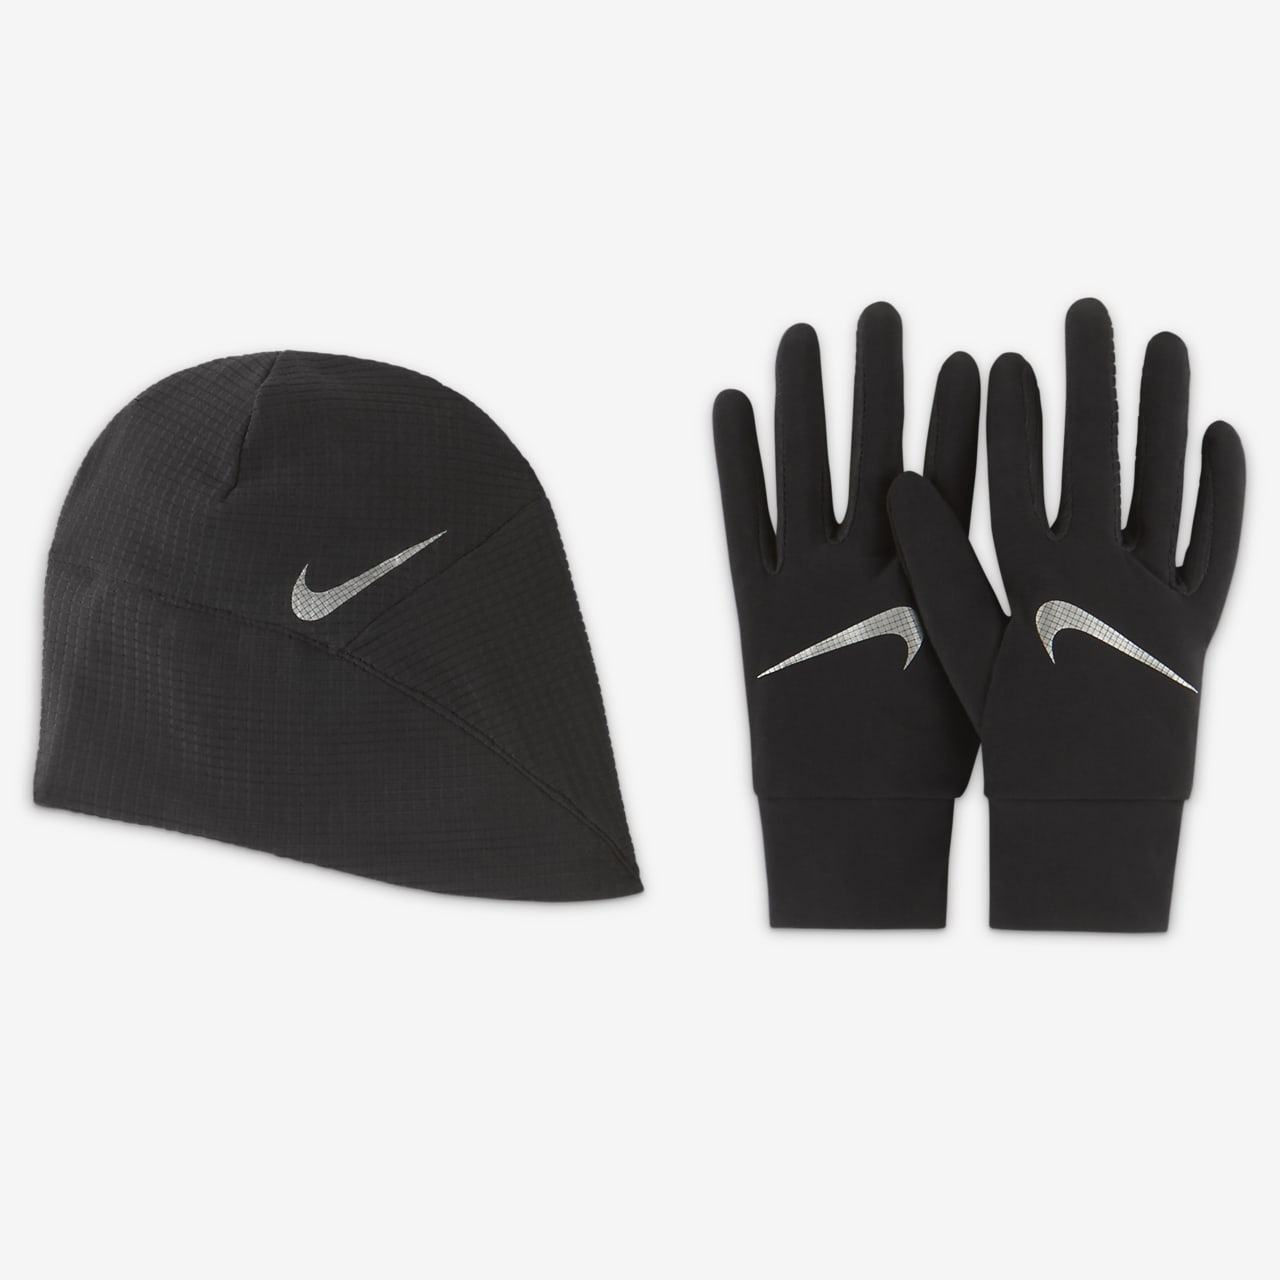 Running Hat and Glove Set. Nike 